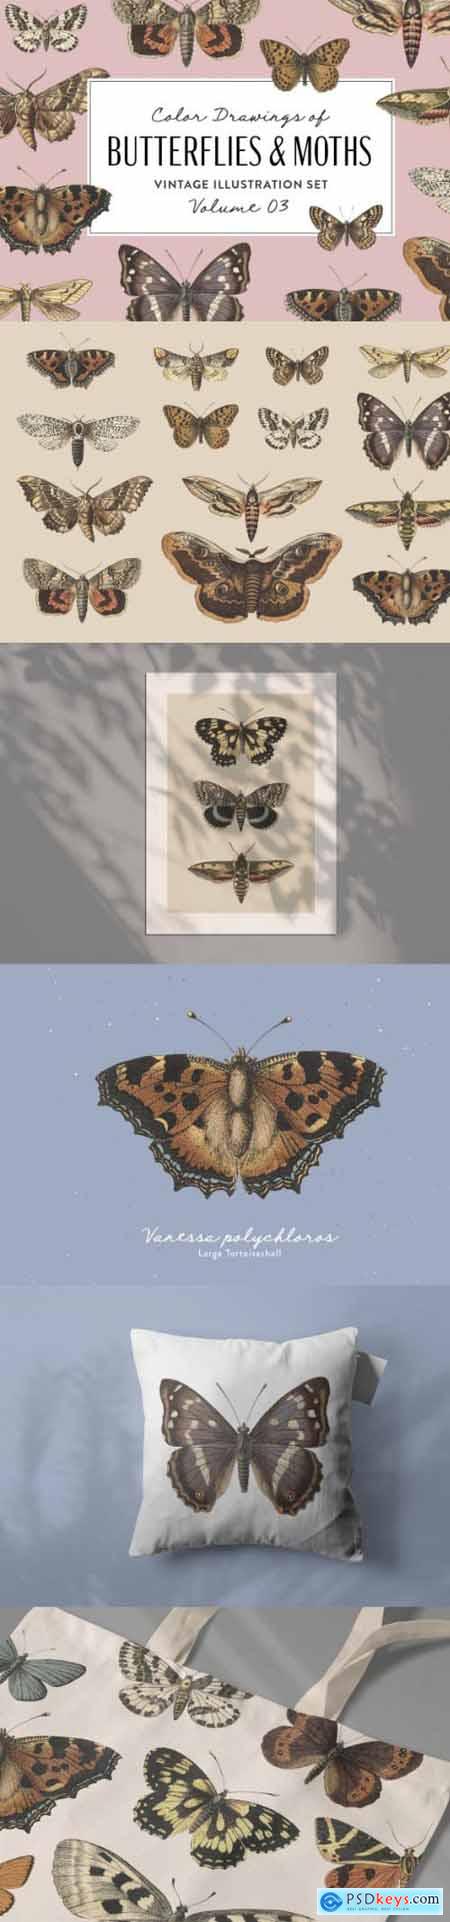 Butterflies & Moths Vintage Graphics Vol. 3